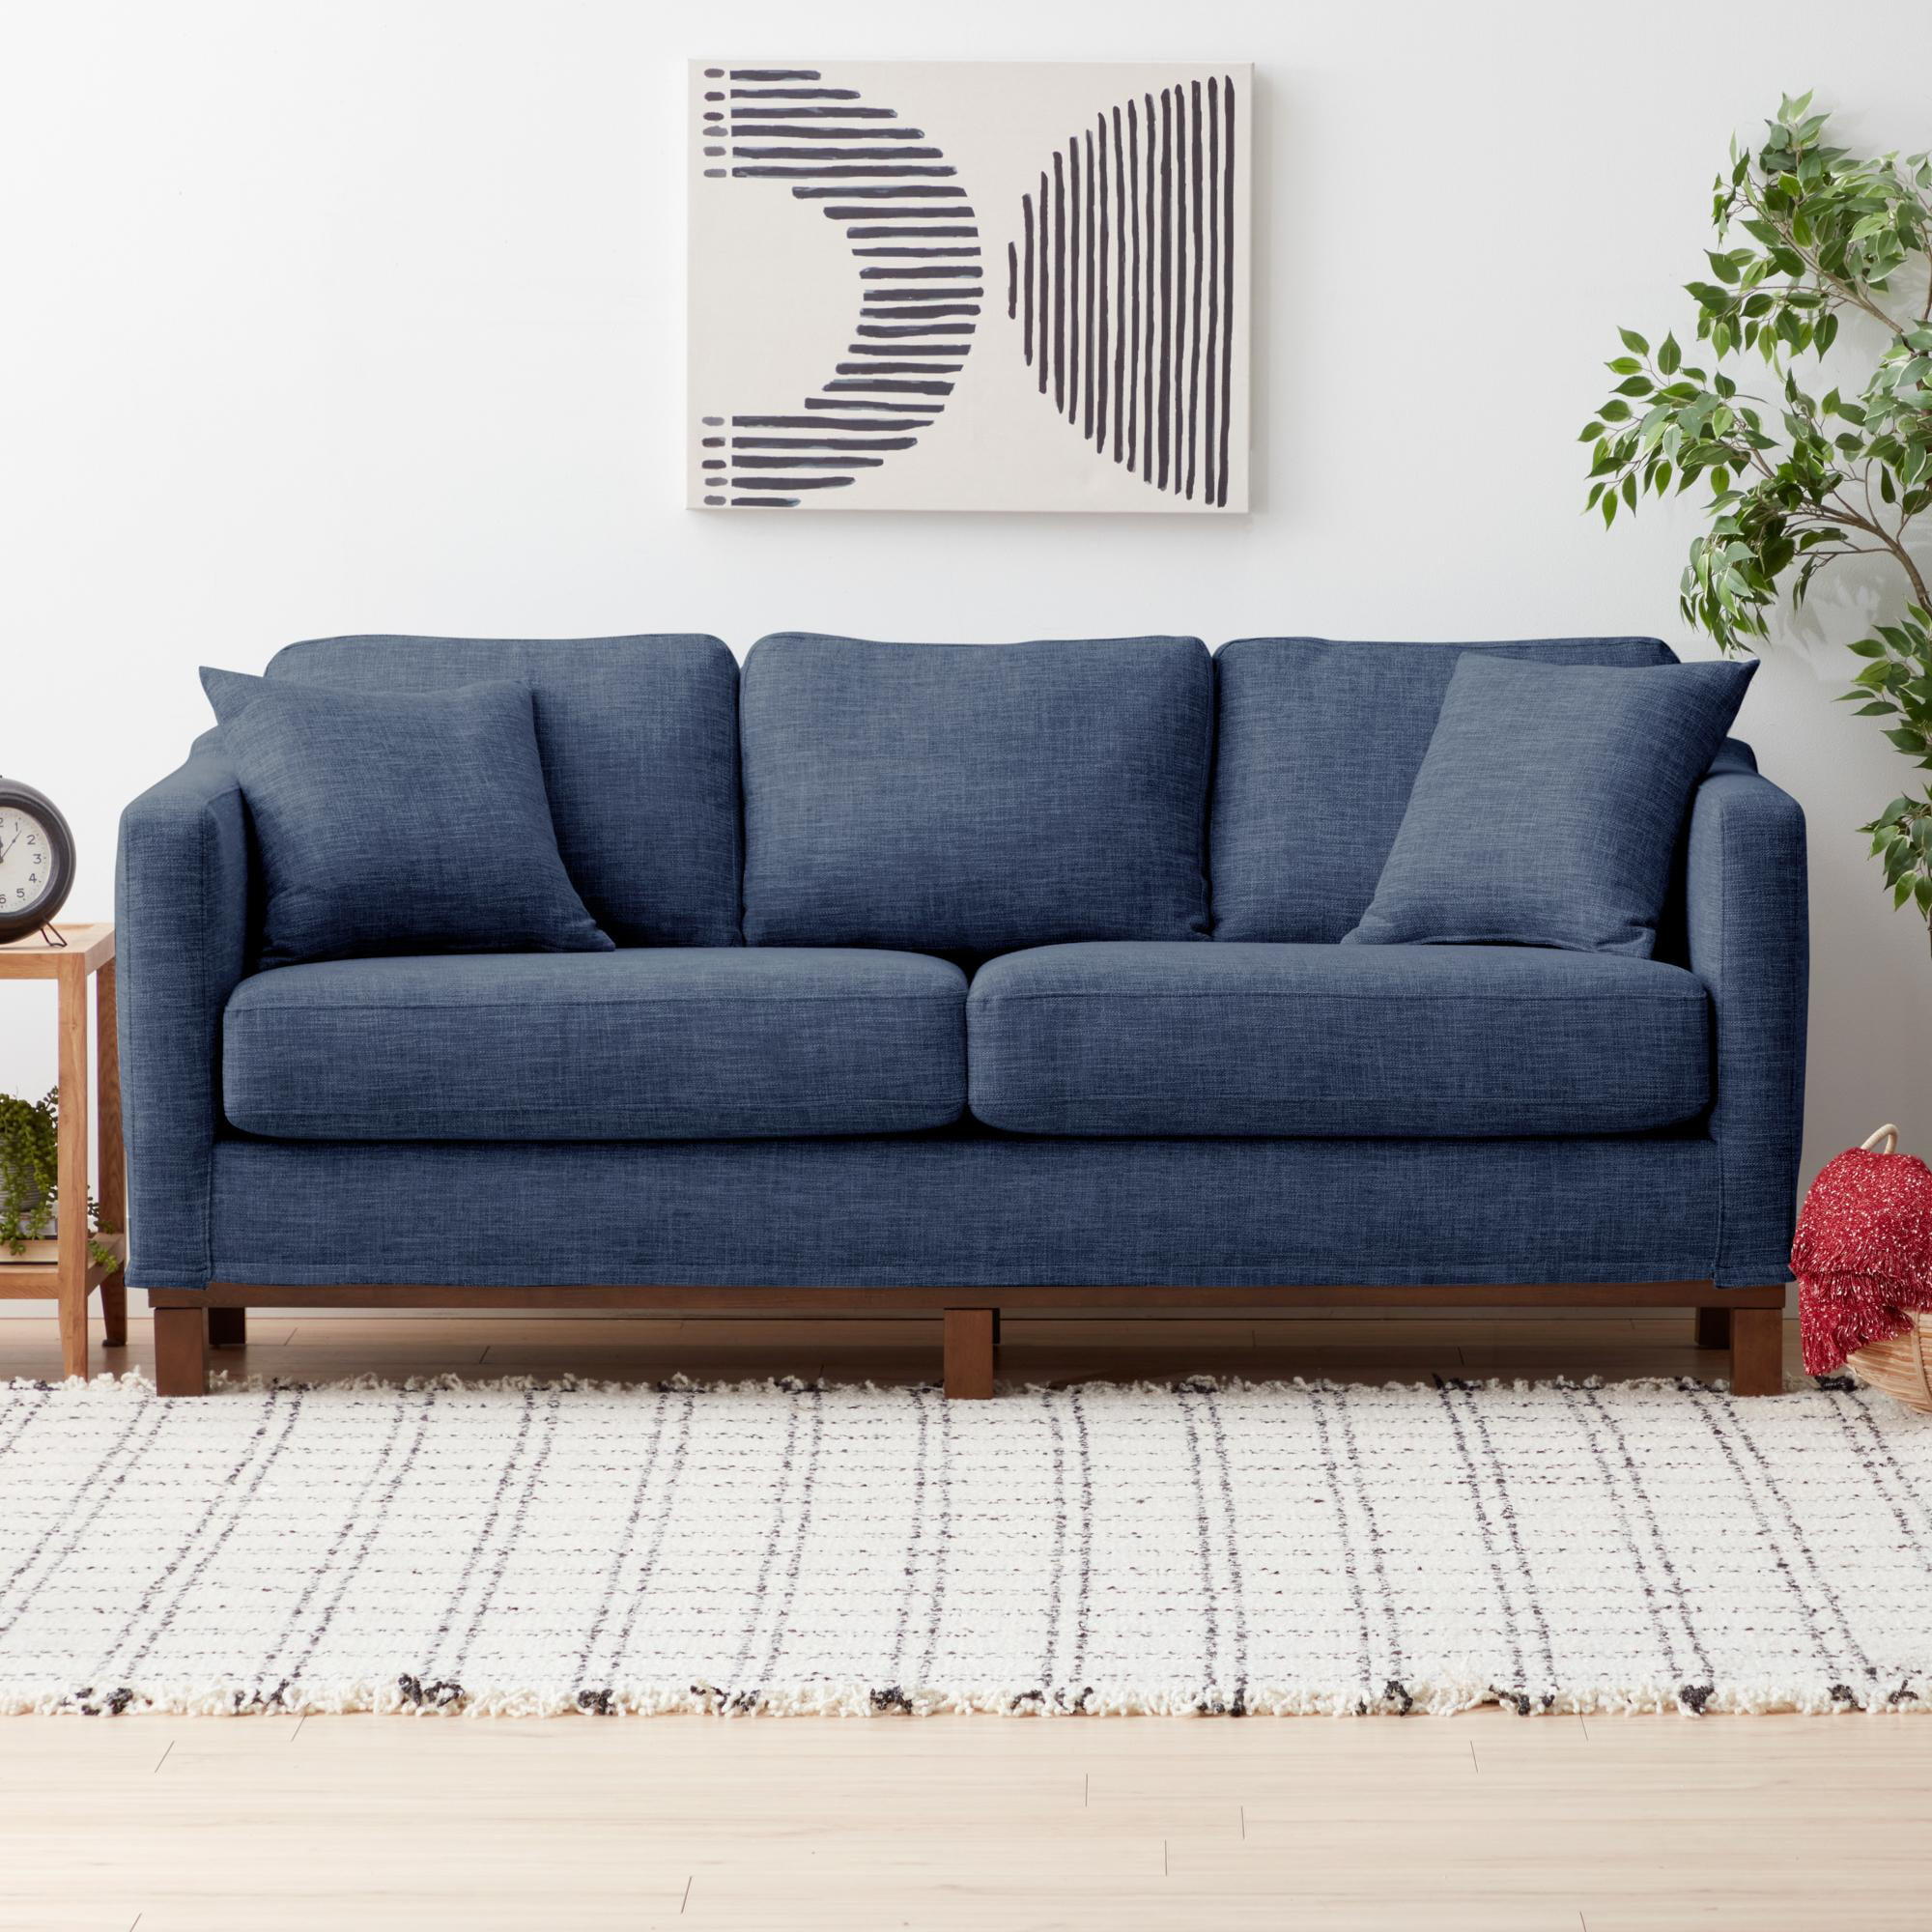 gap-home-walmart-couch.jpg